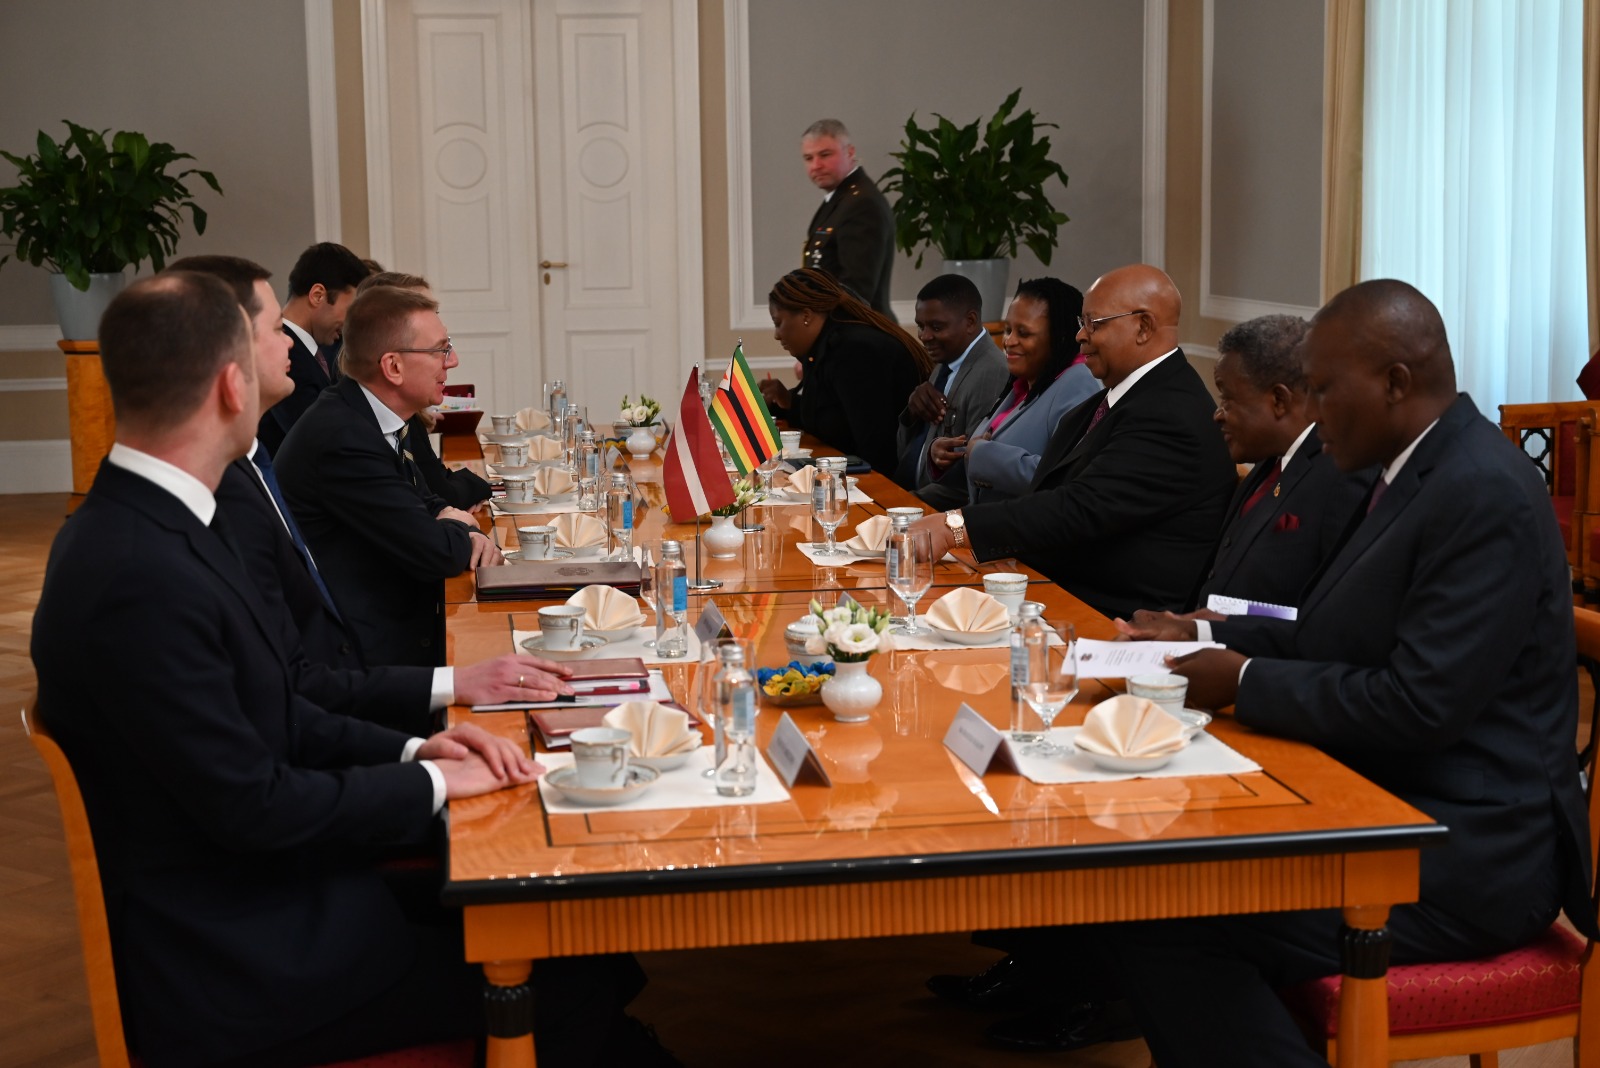 Parliaments of Latvia and Zimbabwe strengthen bilateral ties